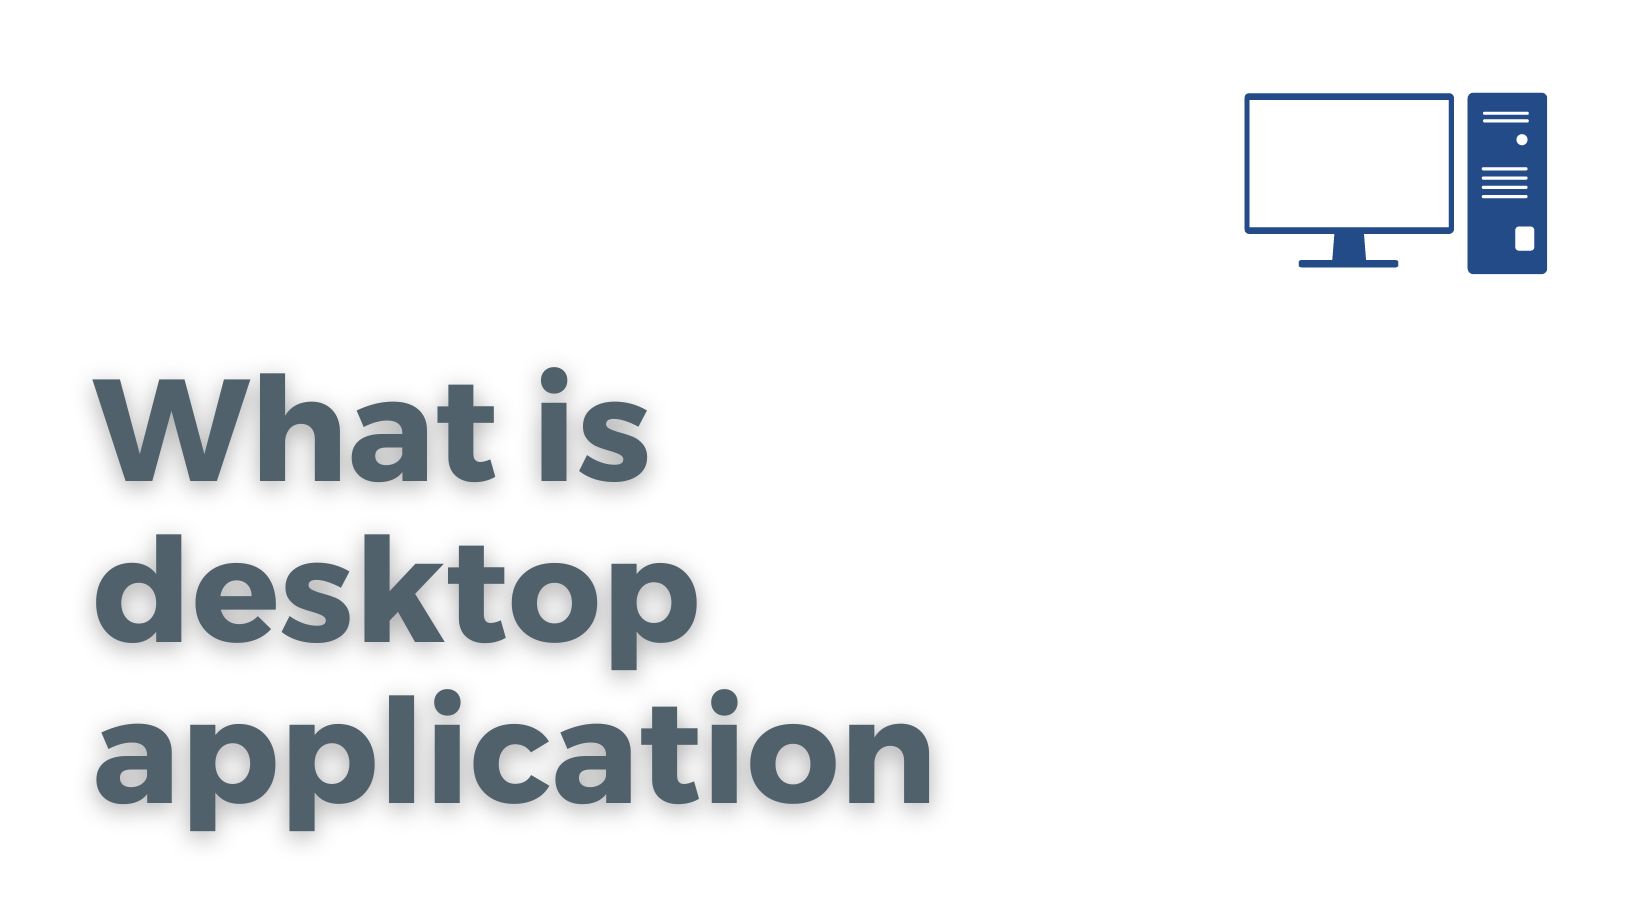 What is desktop application